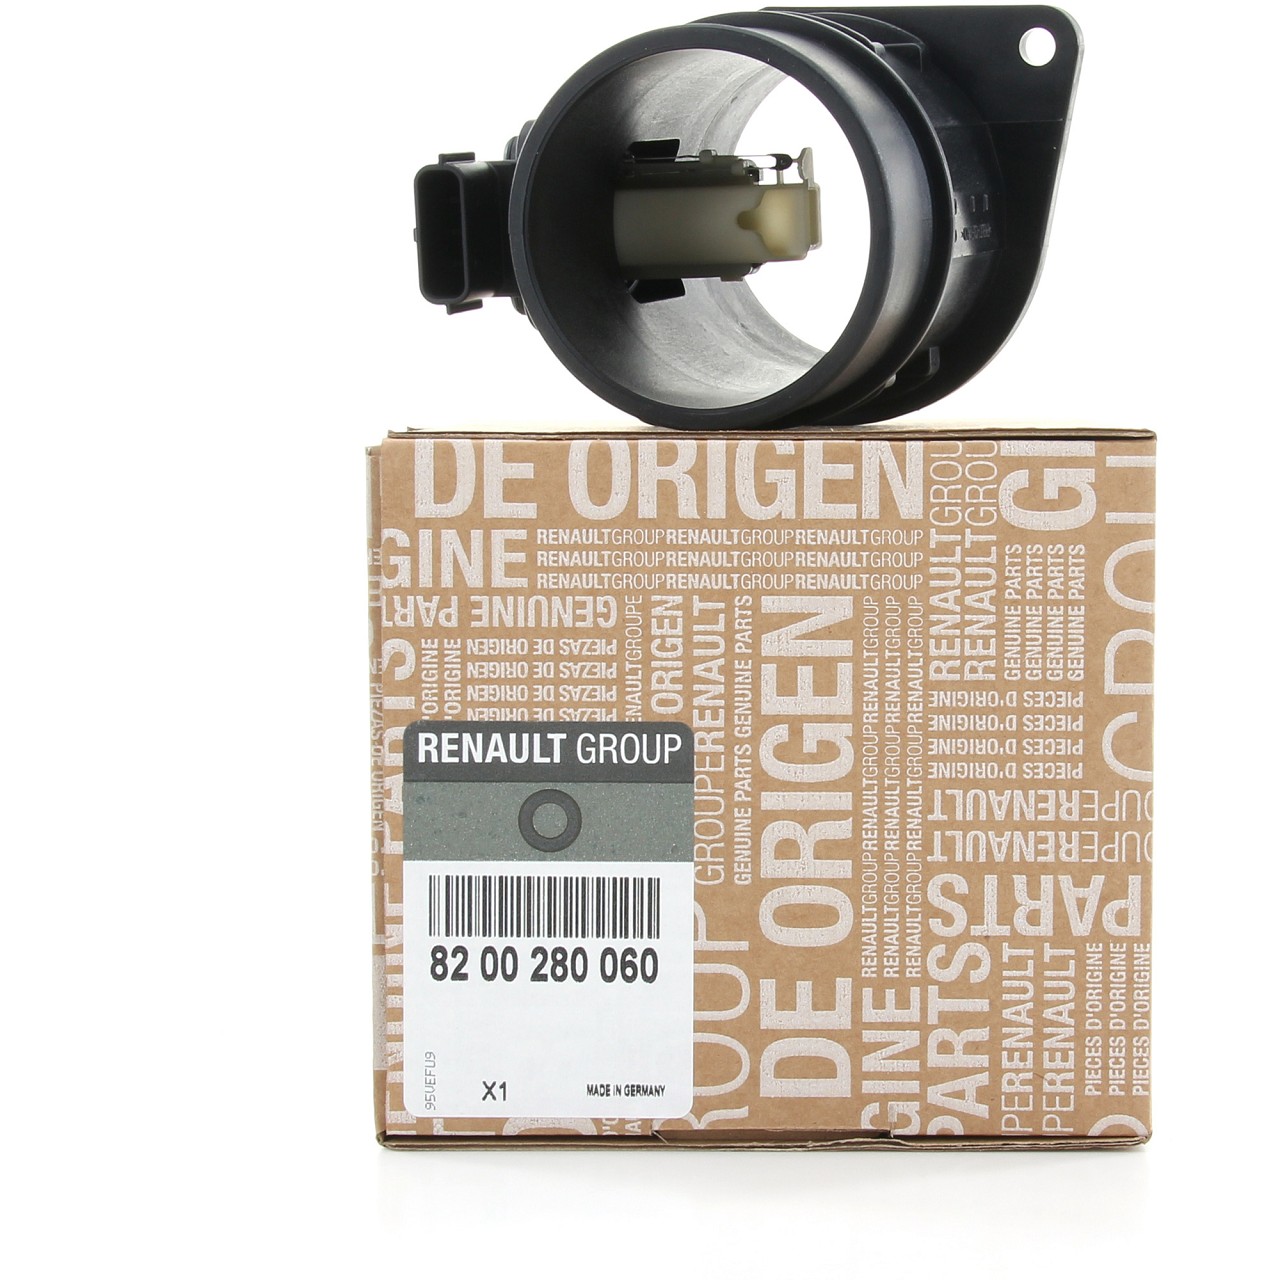 ORIGINAL Renault Luftmengenmesser Luftmassenmesser Kangoo Master 8200280060